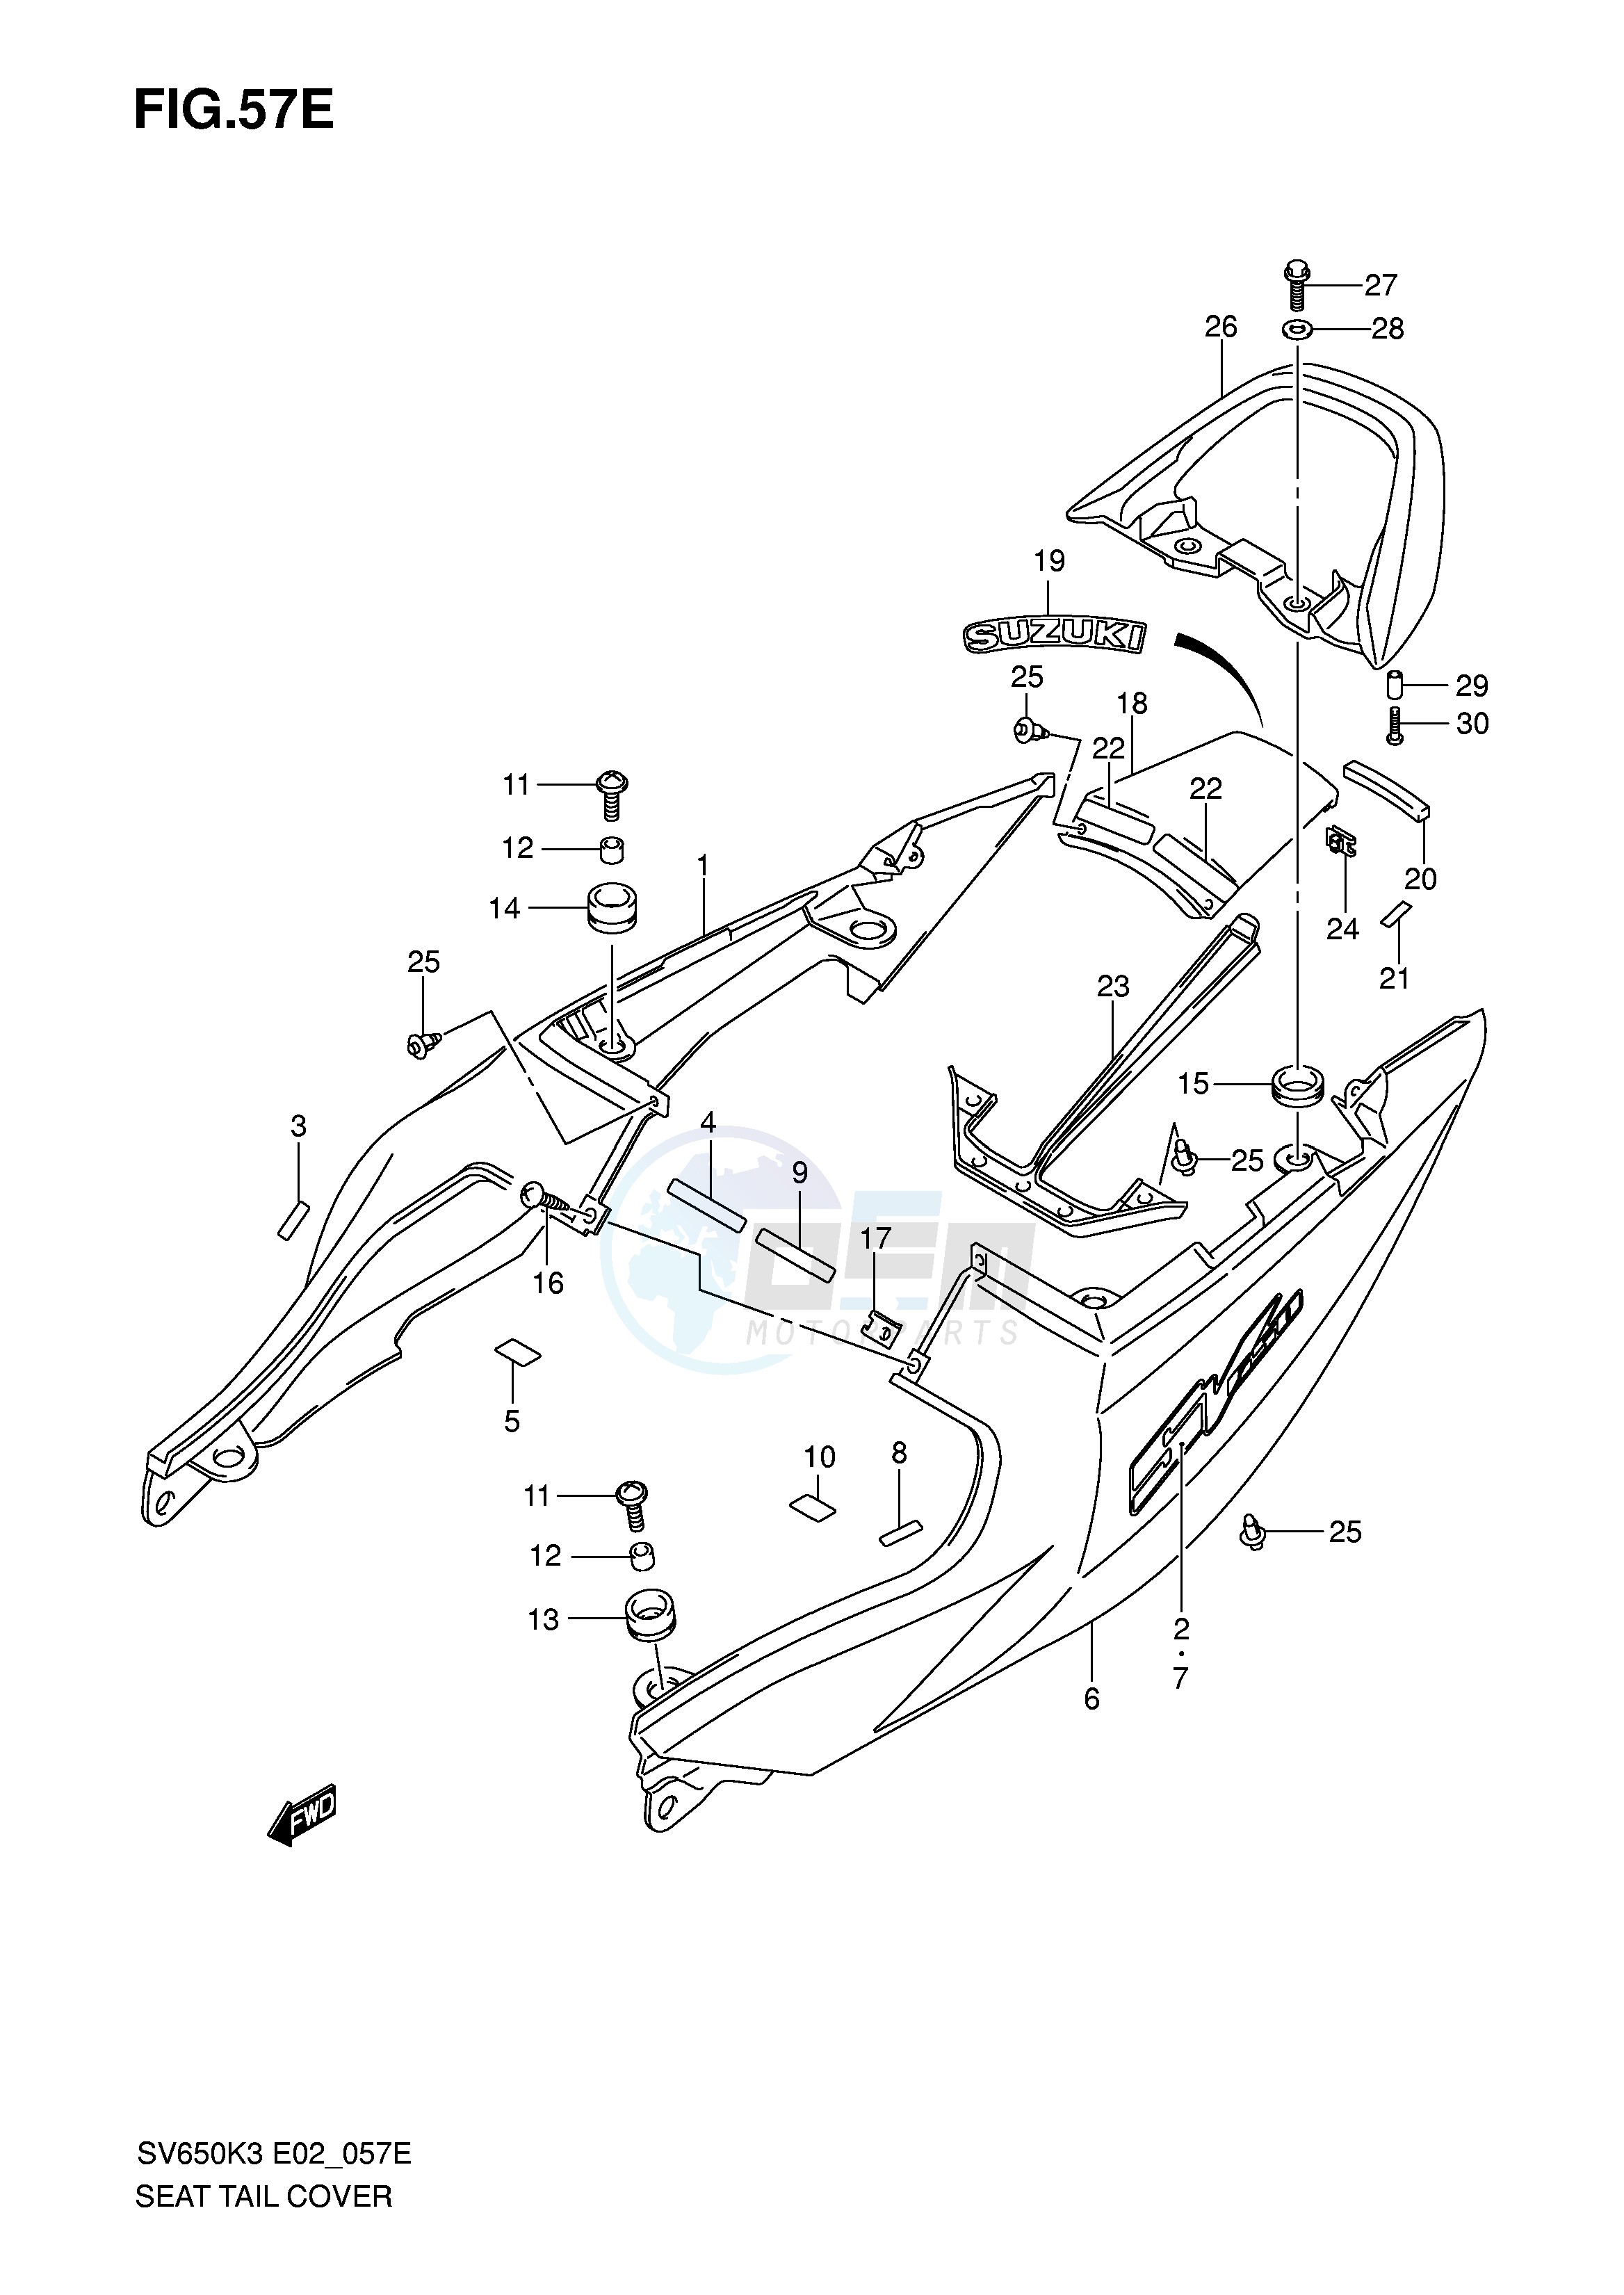 SEAT TAIL COVER (SV650K6 UK6) blueprint